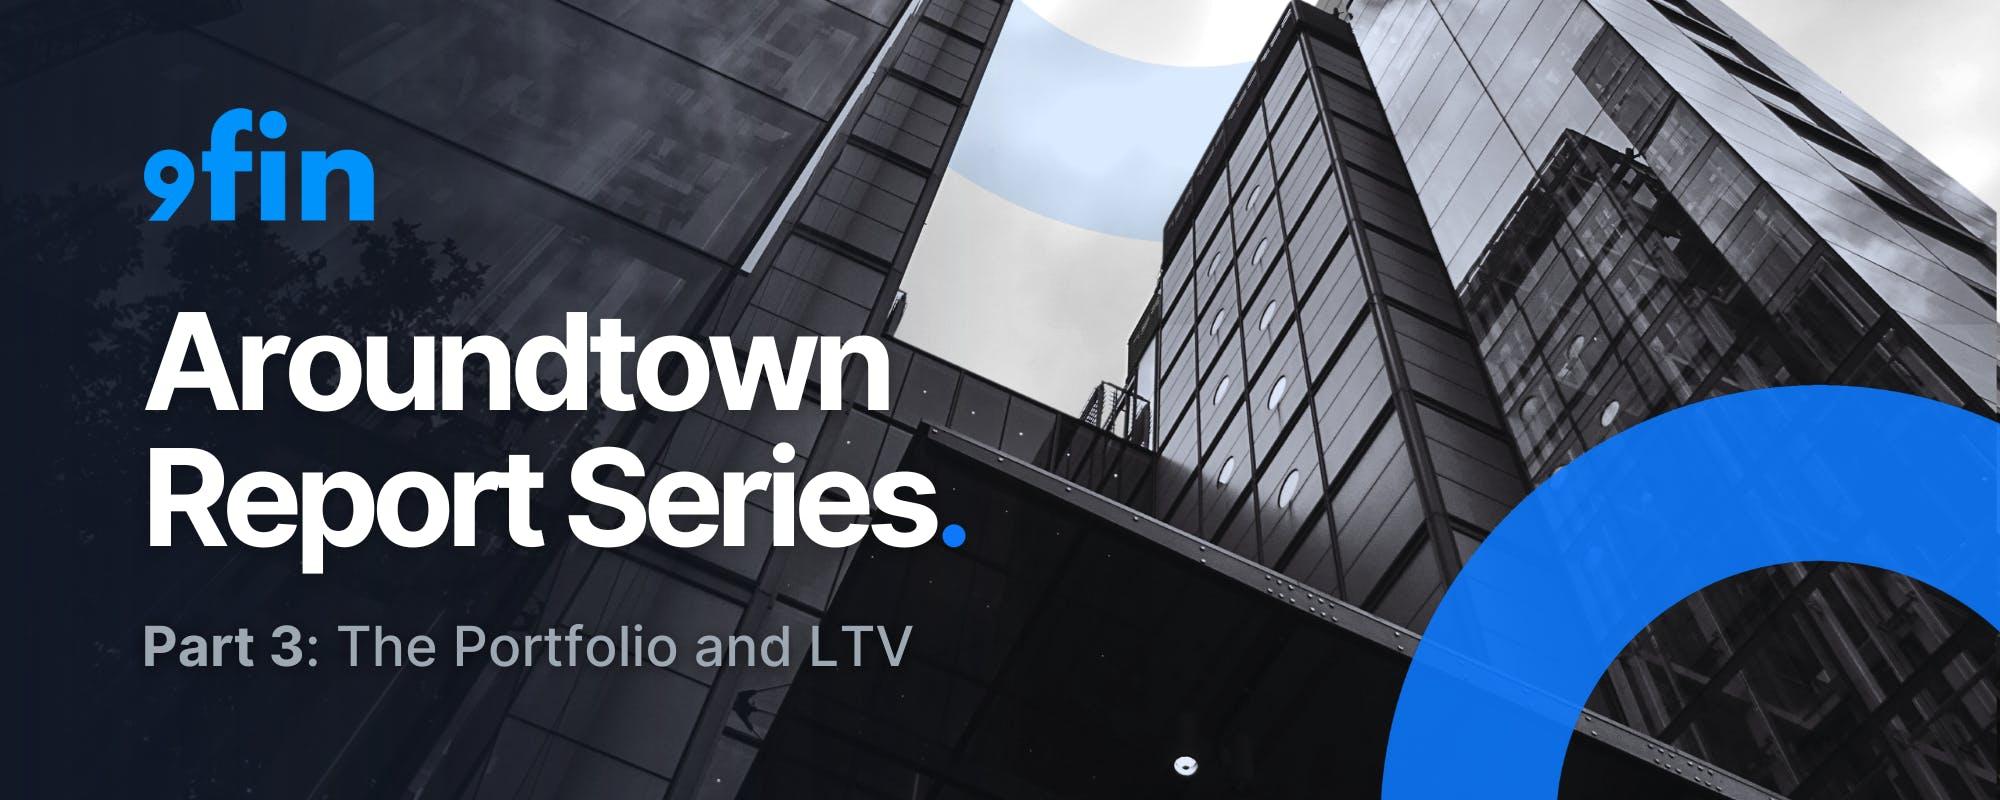 Aroundtown Report Series Part 3 — The Portfolio and LTV